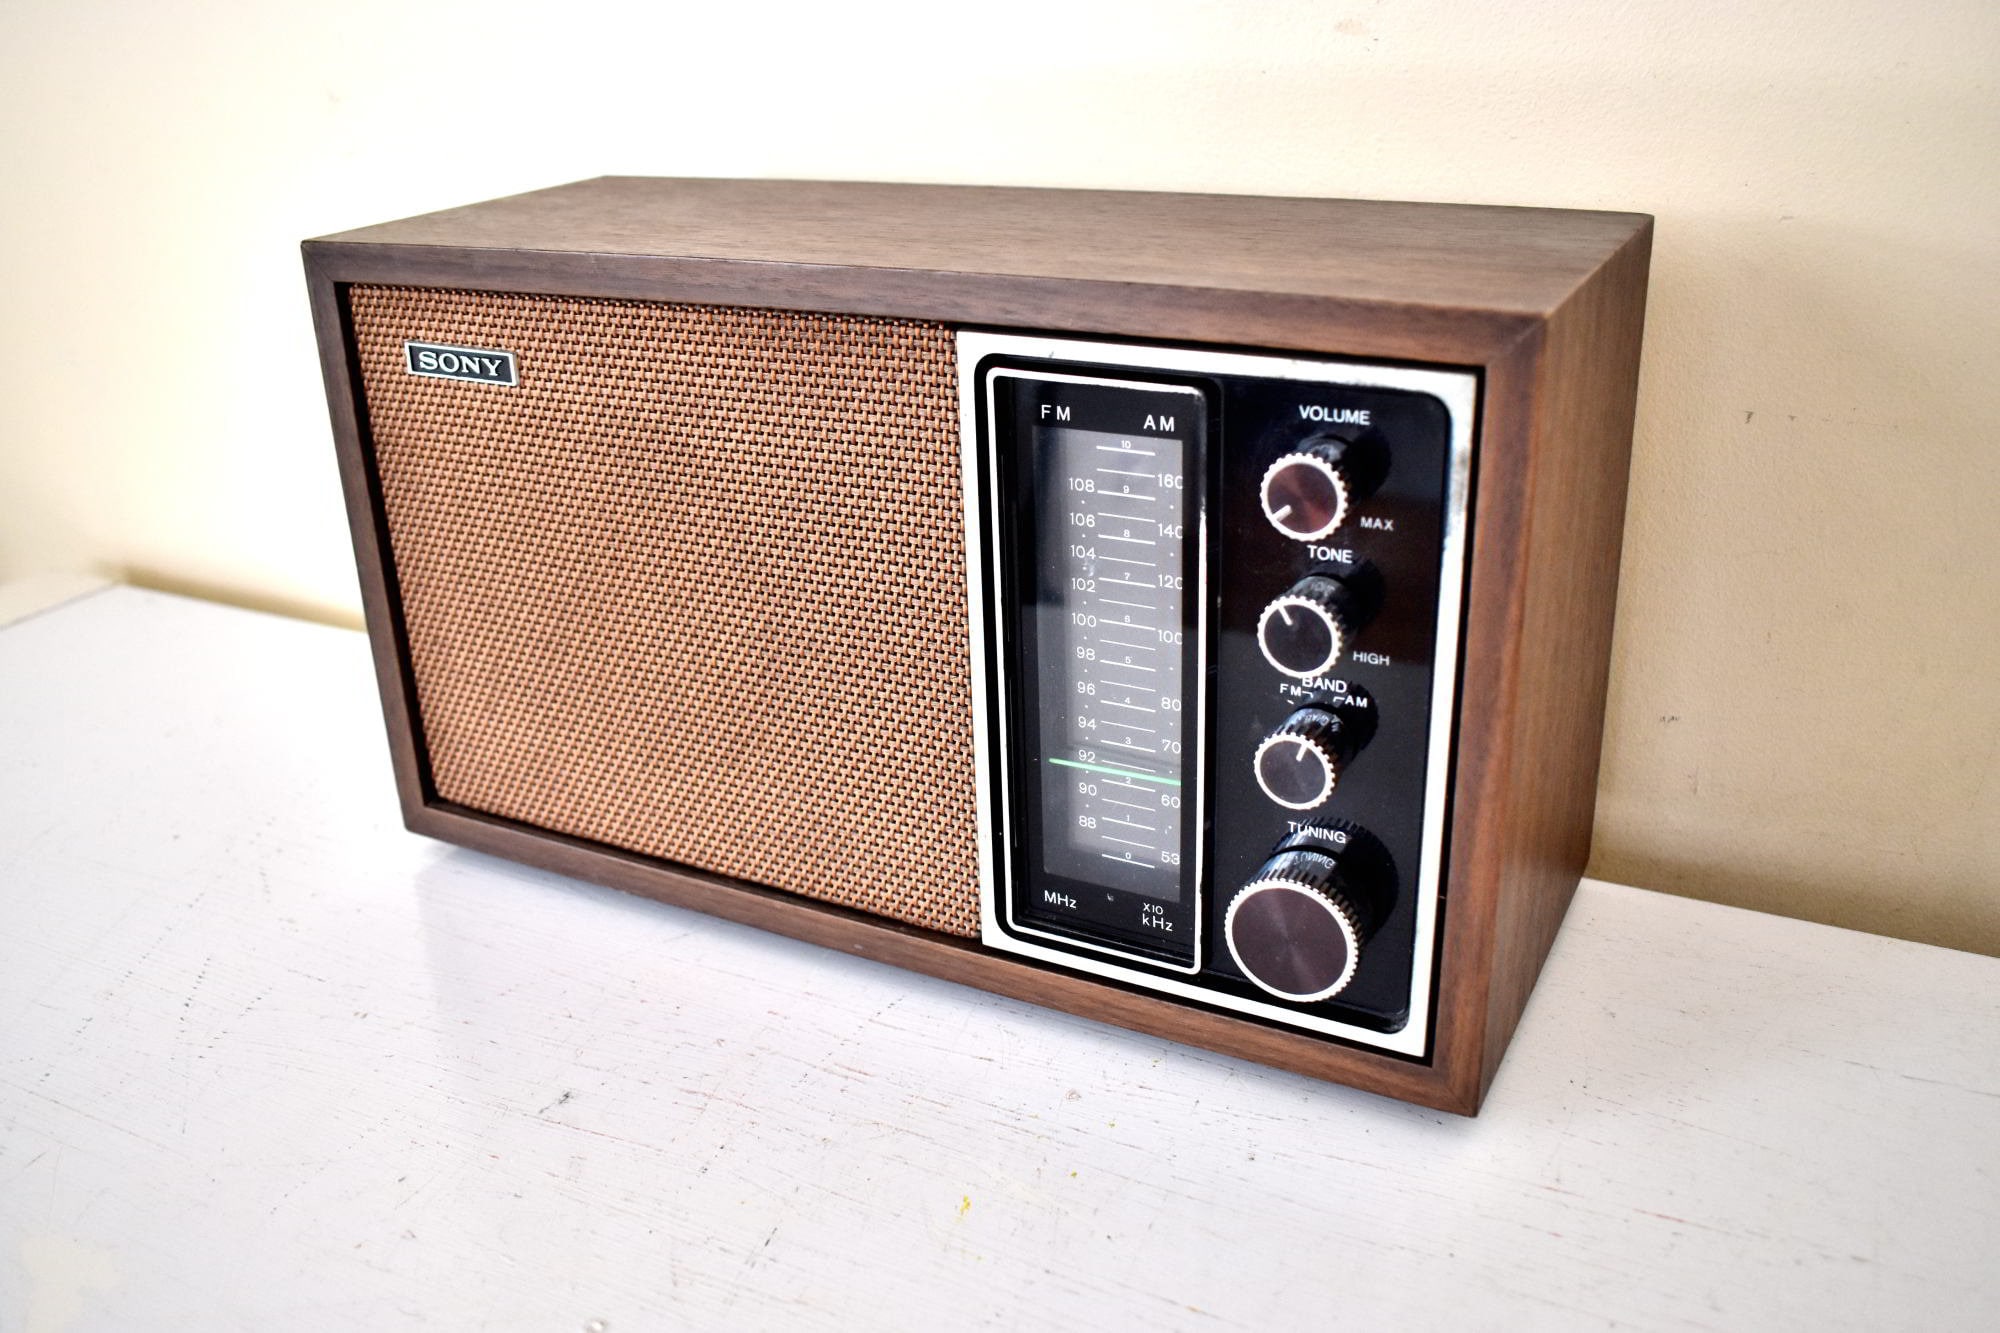 Radio Portable FM Poste, Vintage Poche Radios Transistor Bluetooth